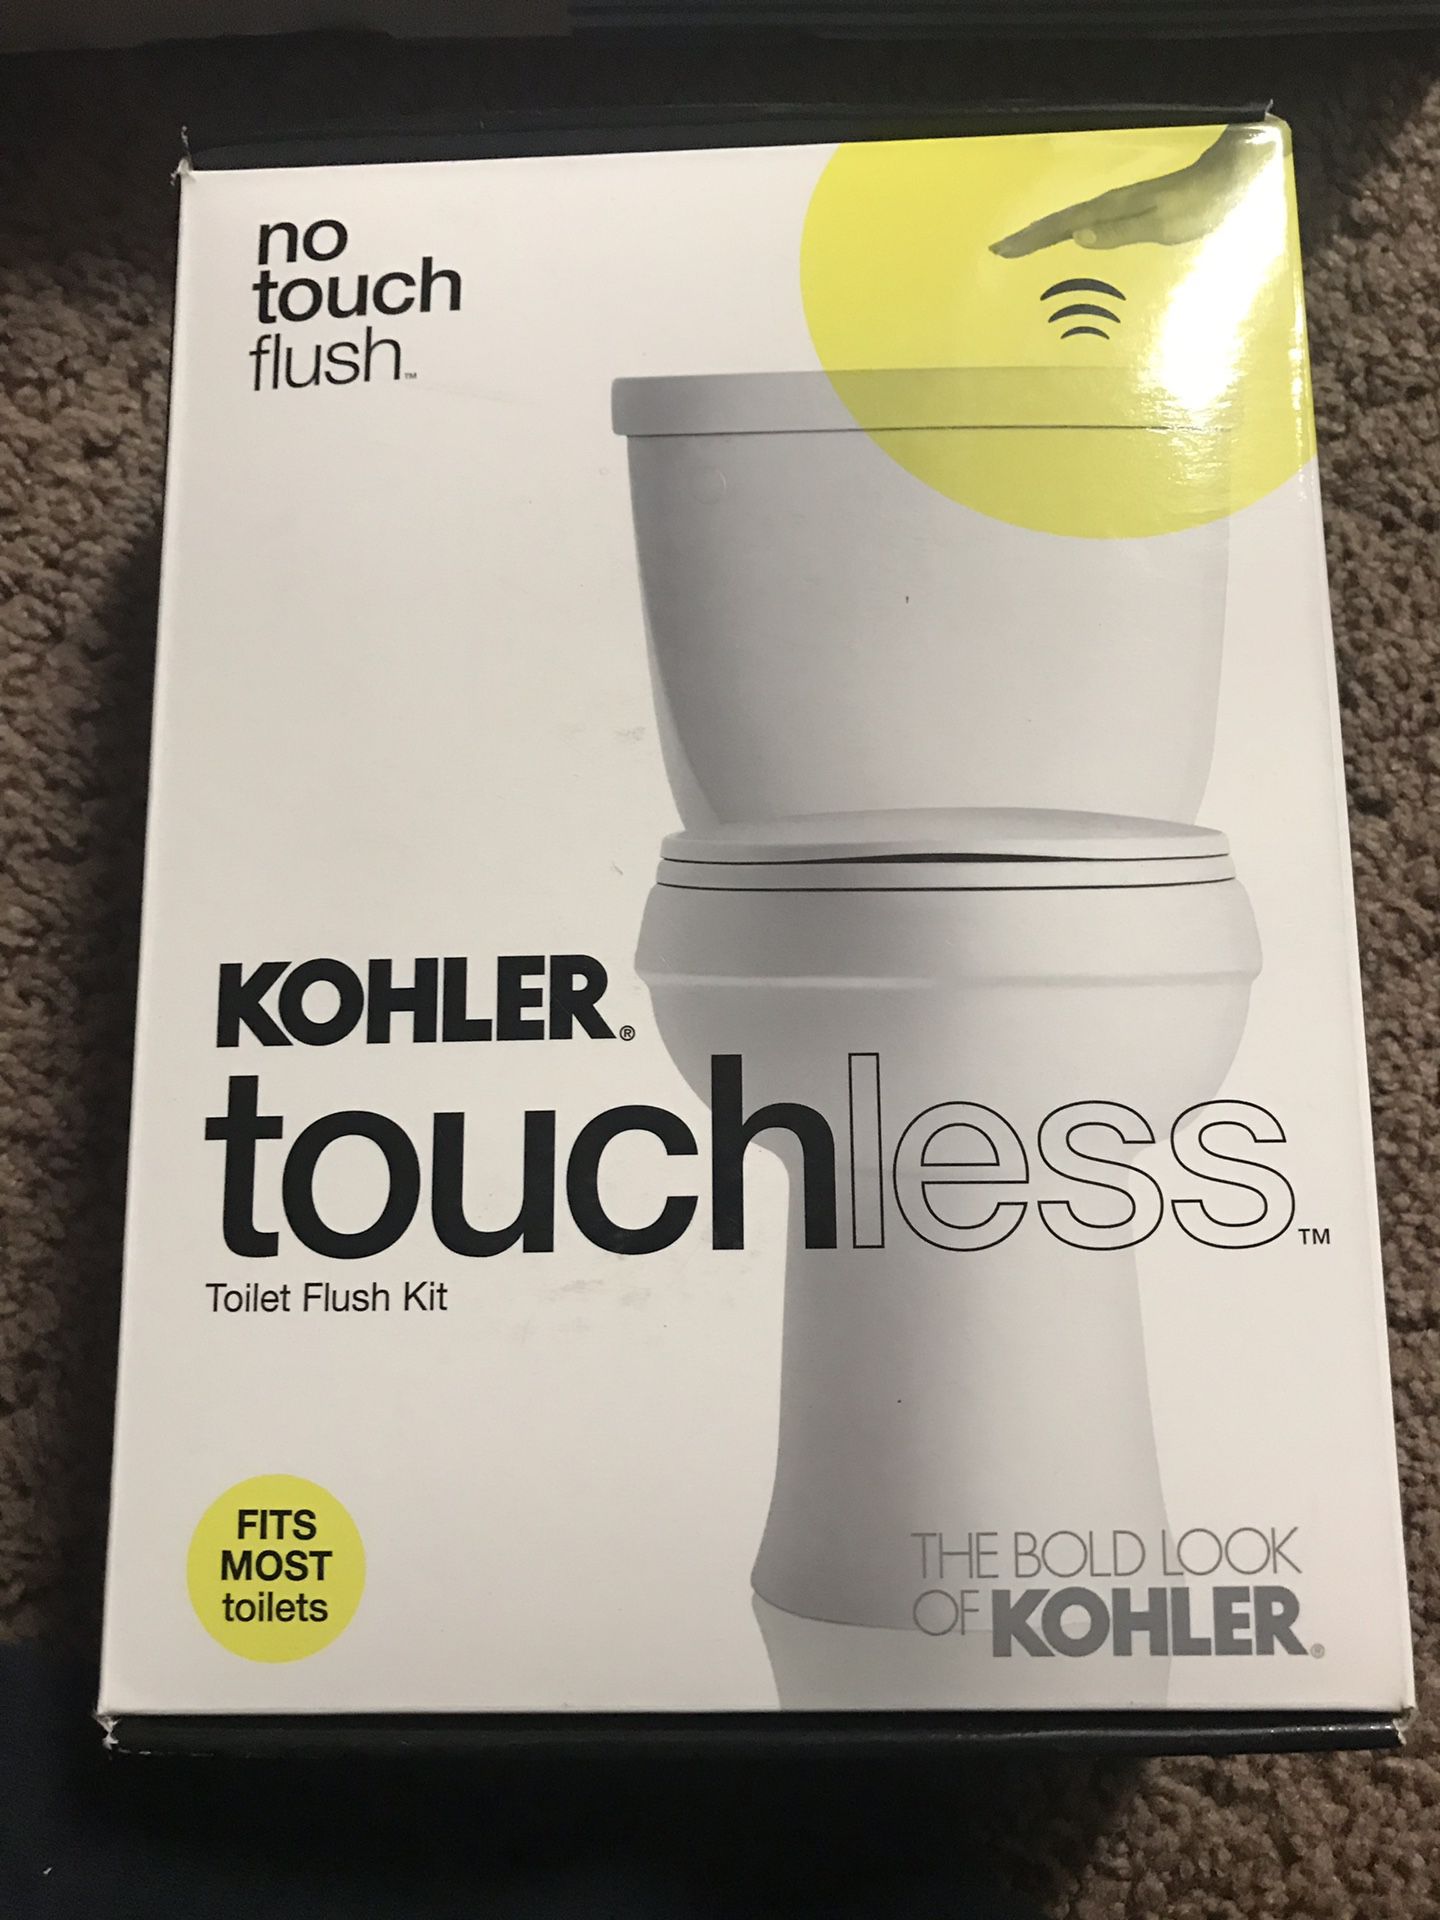 Kohler touchless toilet conversion kit